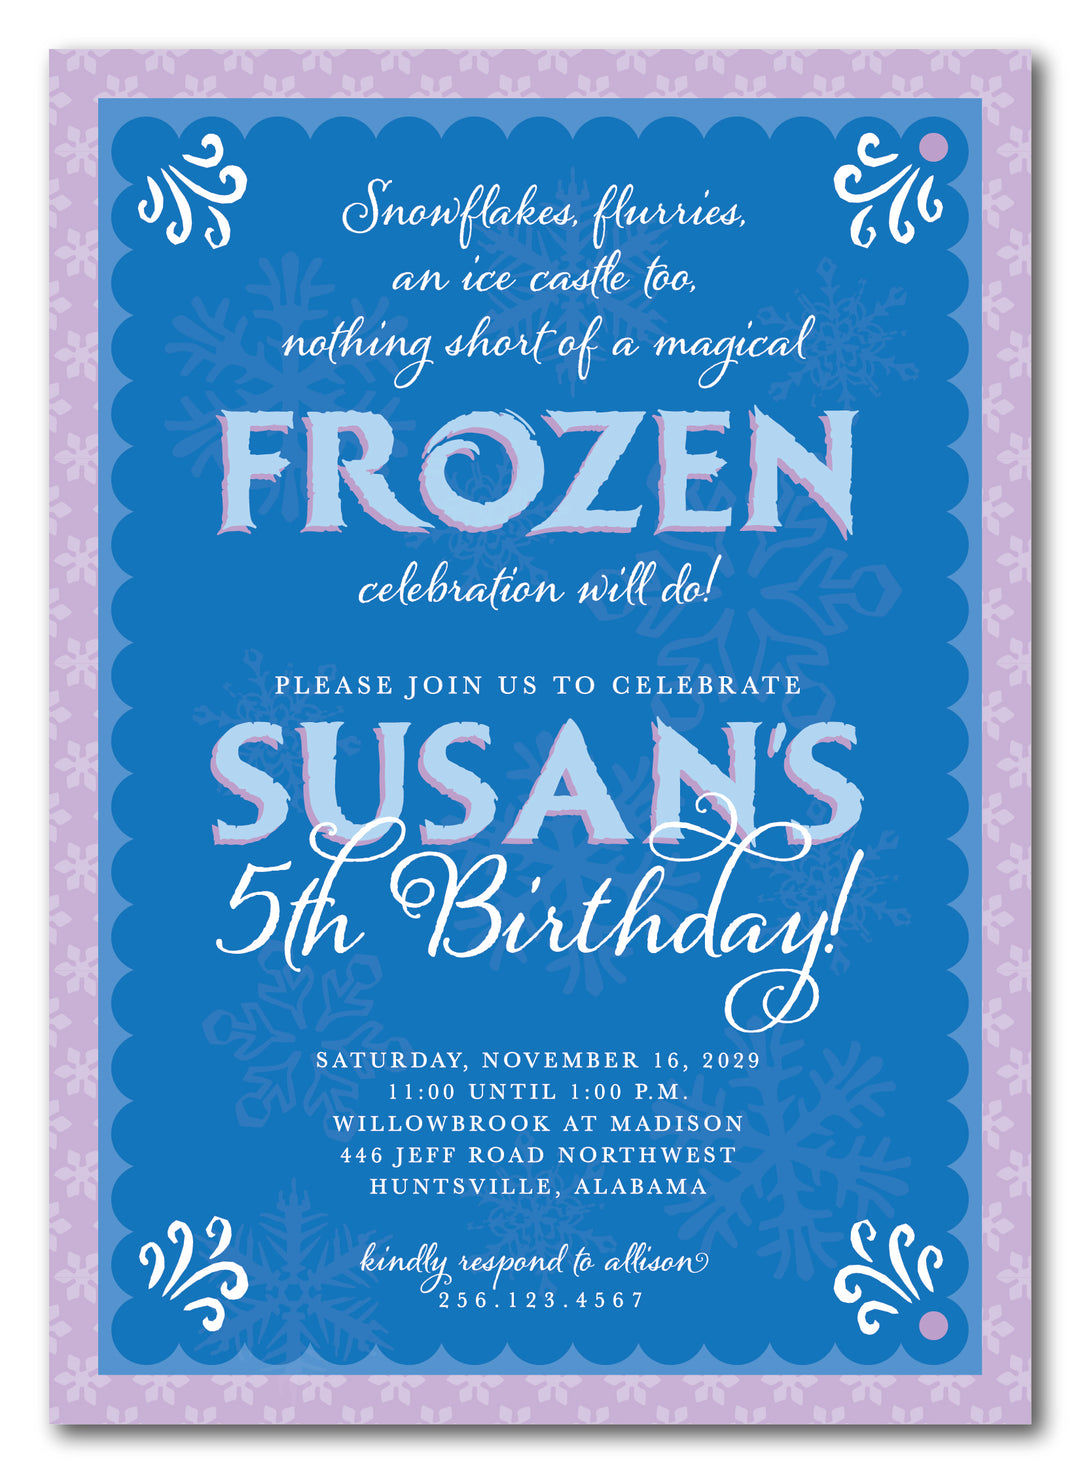 The Frozen Birthday Party Invitation